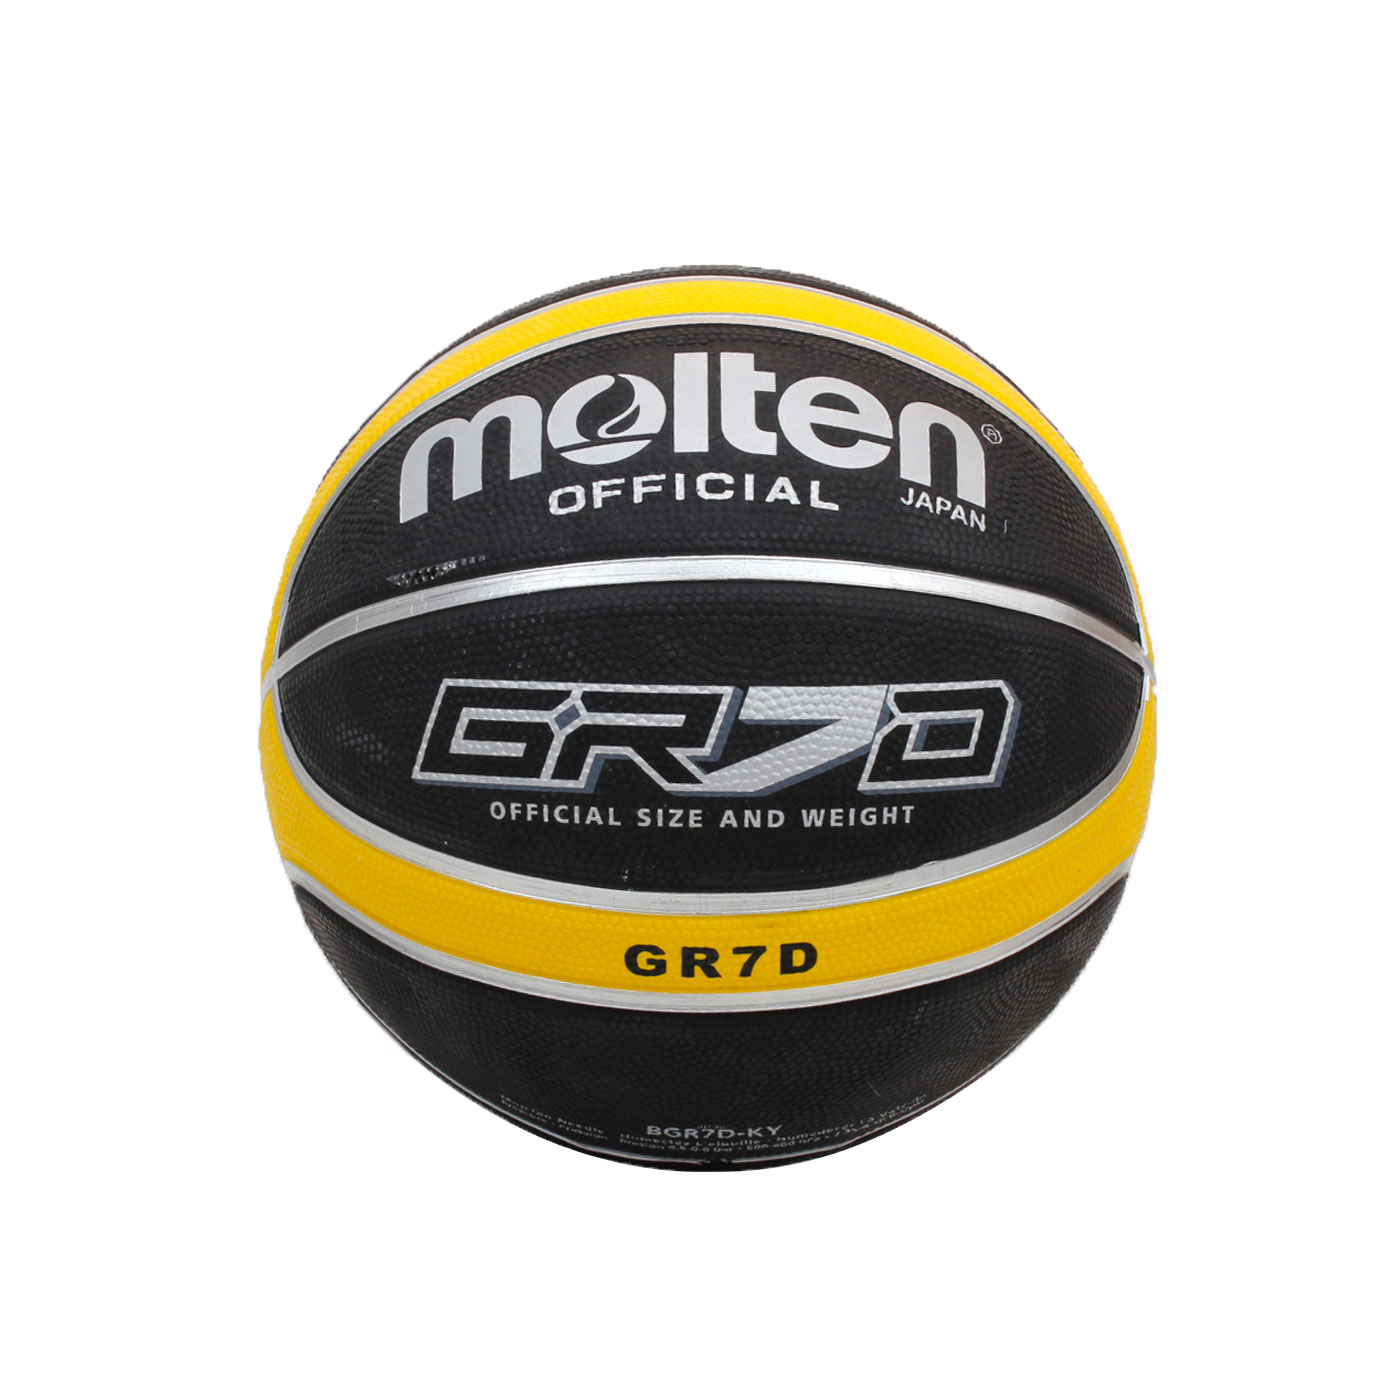 Molten 12片橡膠深溝籃球 BGR7D - 黑黃